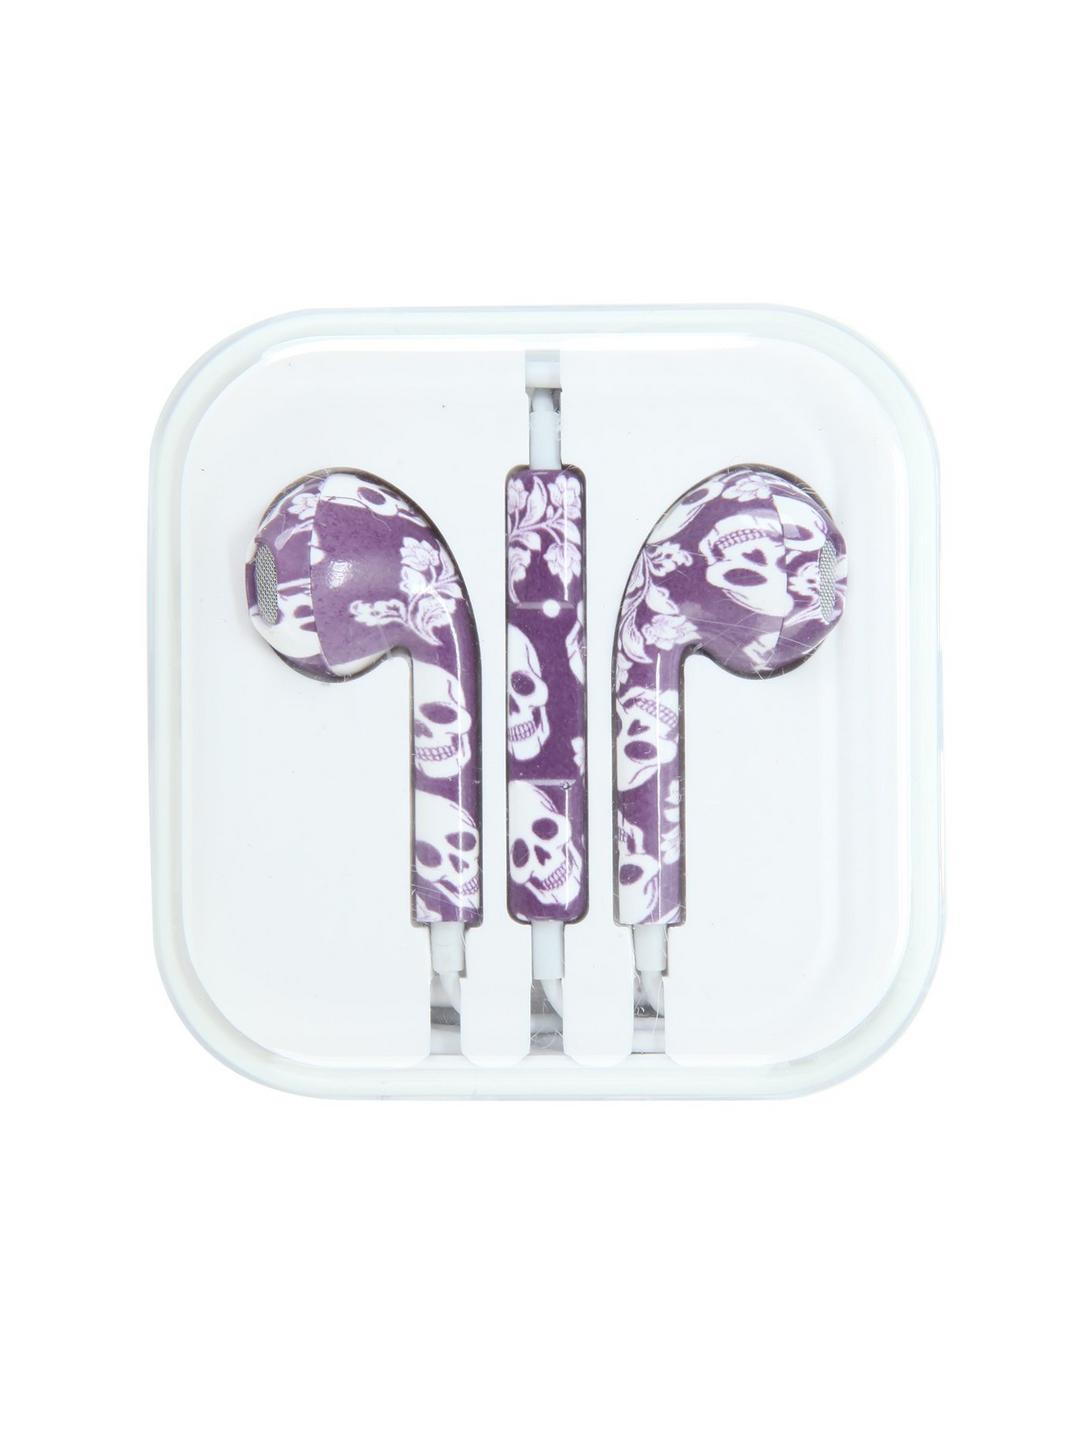 Micase Purple Skull Floral Print Earbuds, , hi-res